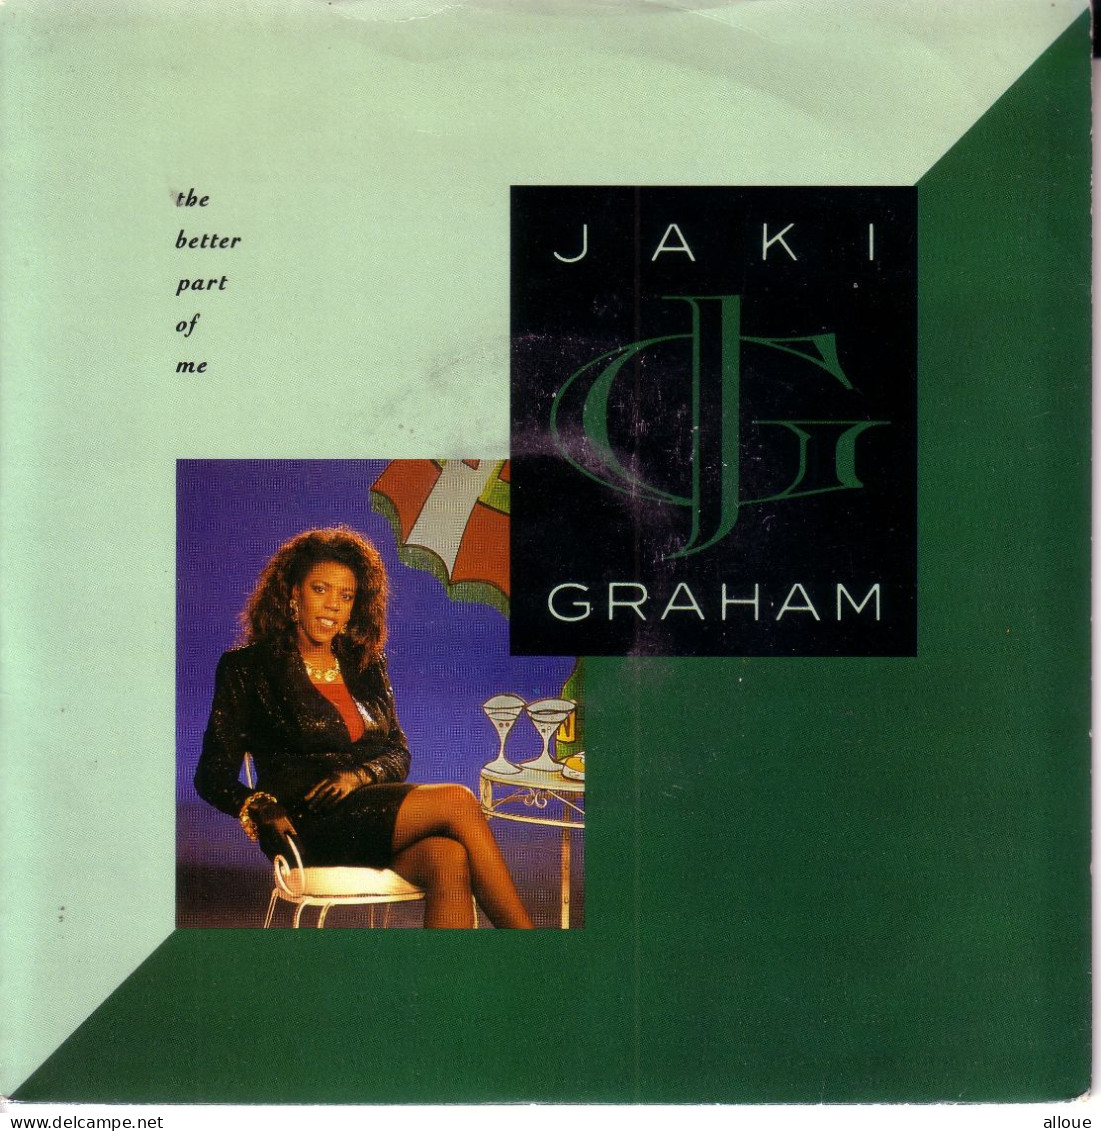 JAKI GRAHAM - SG UK - THE BETTER PART OF ME + NO MERCY - Rock